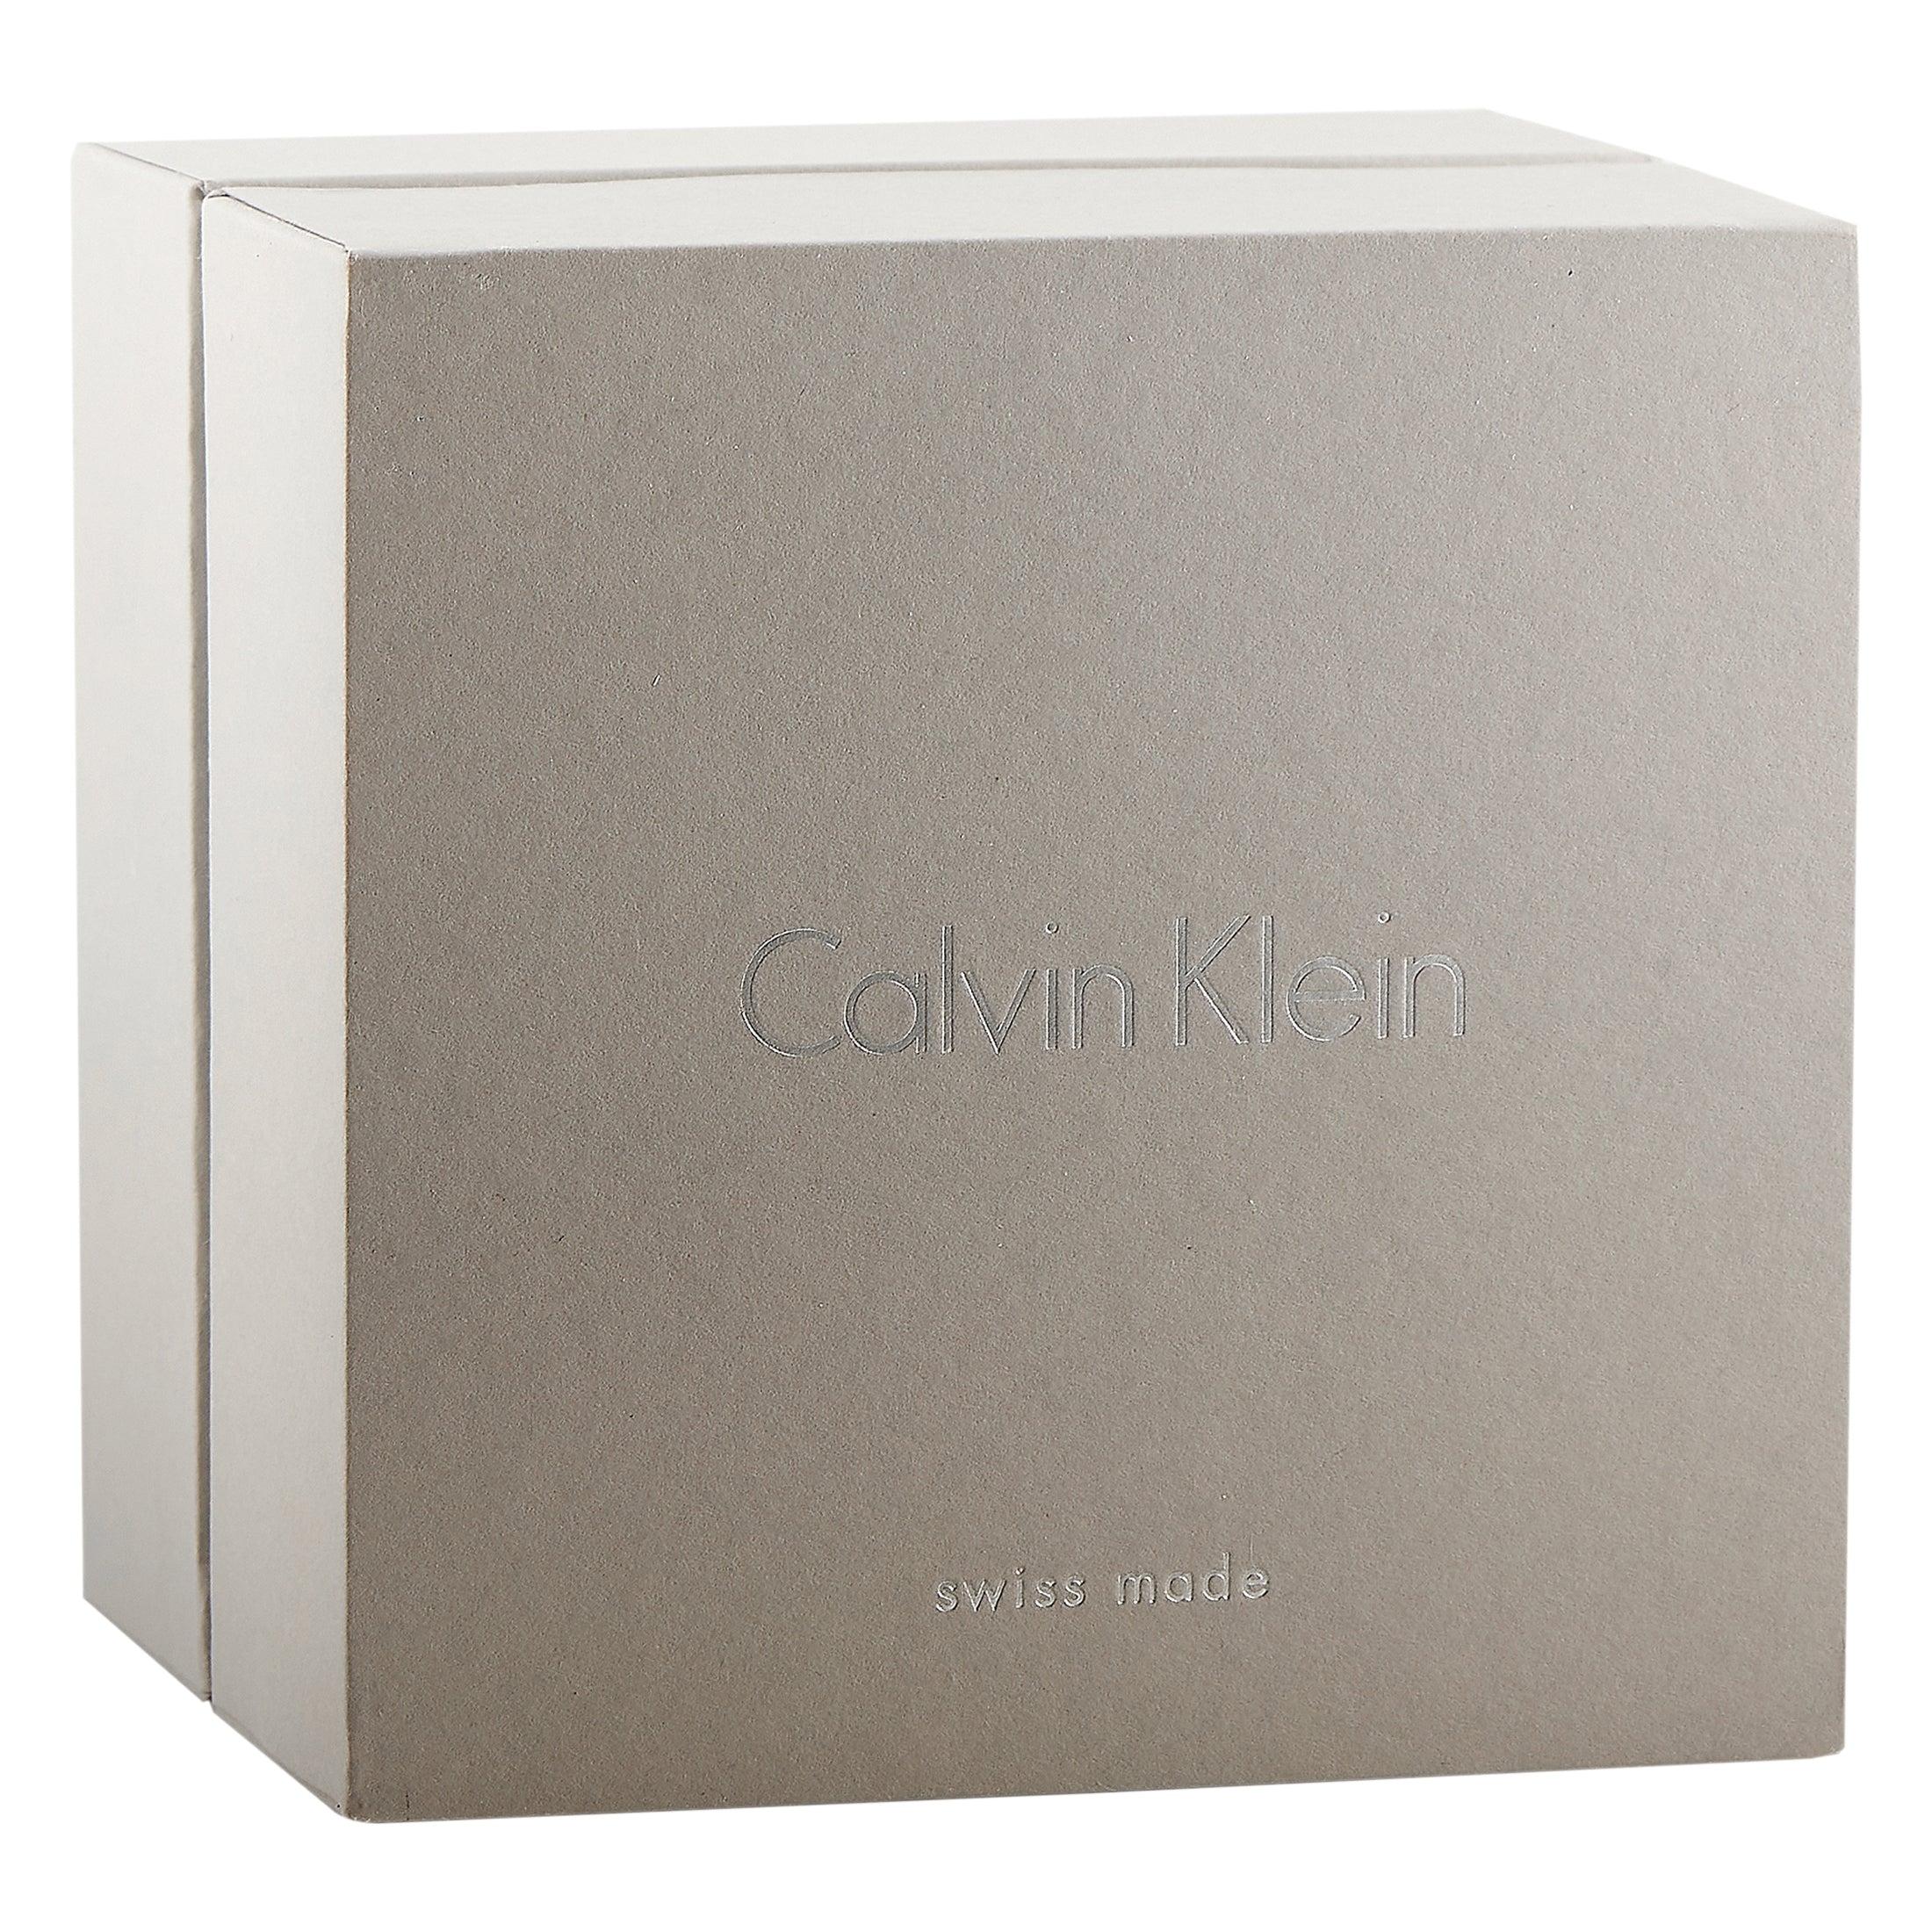 Calvin Klein Eager Chronograph Stainless Steel Watch K4b381b3 for Men | Lyst